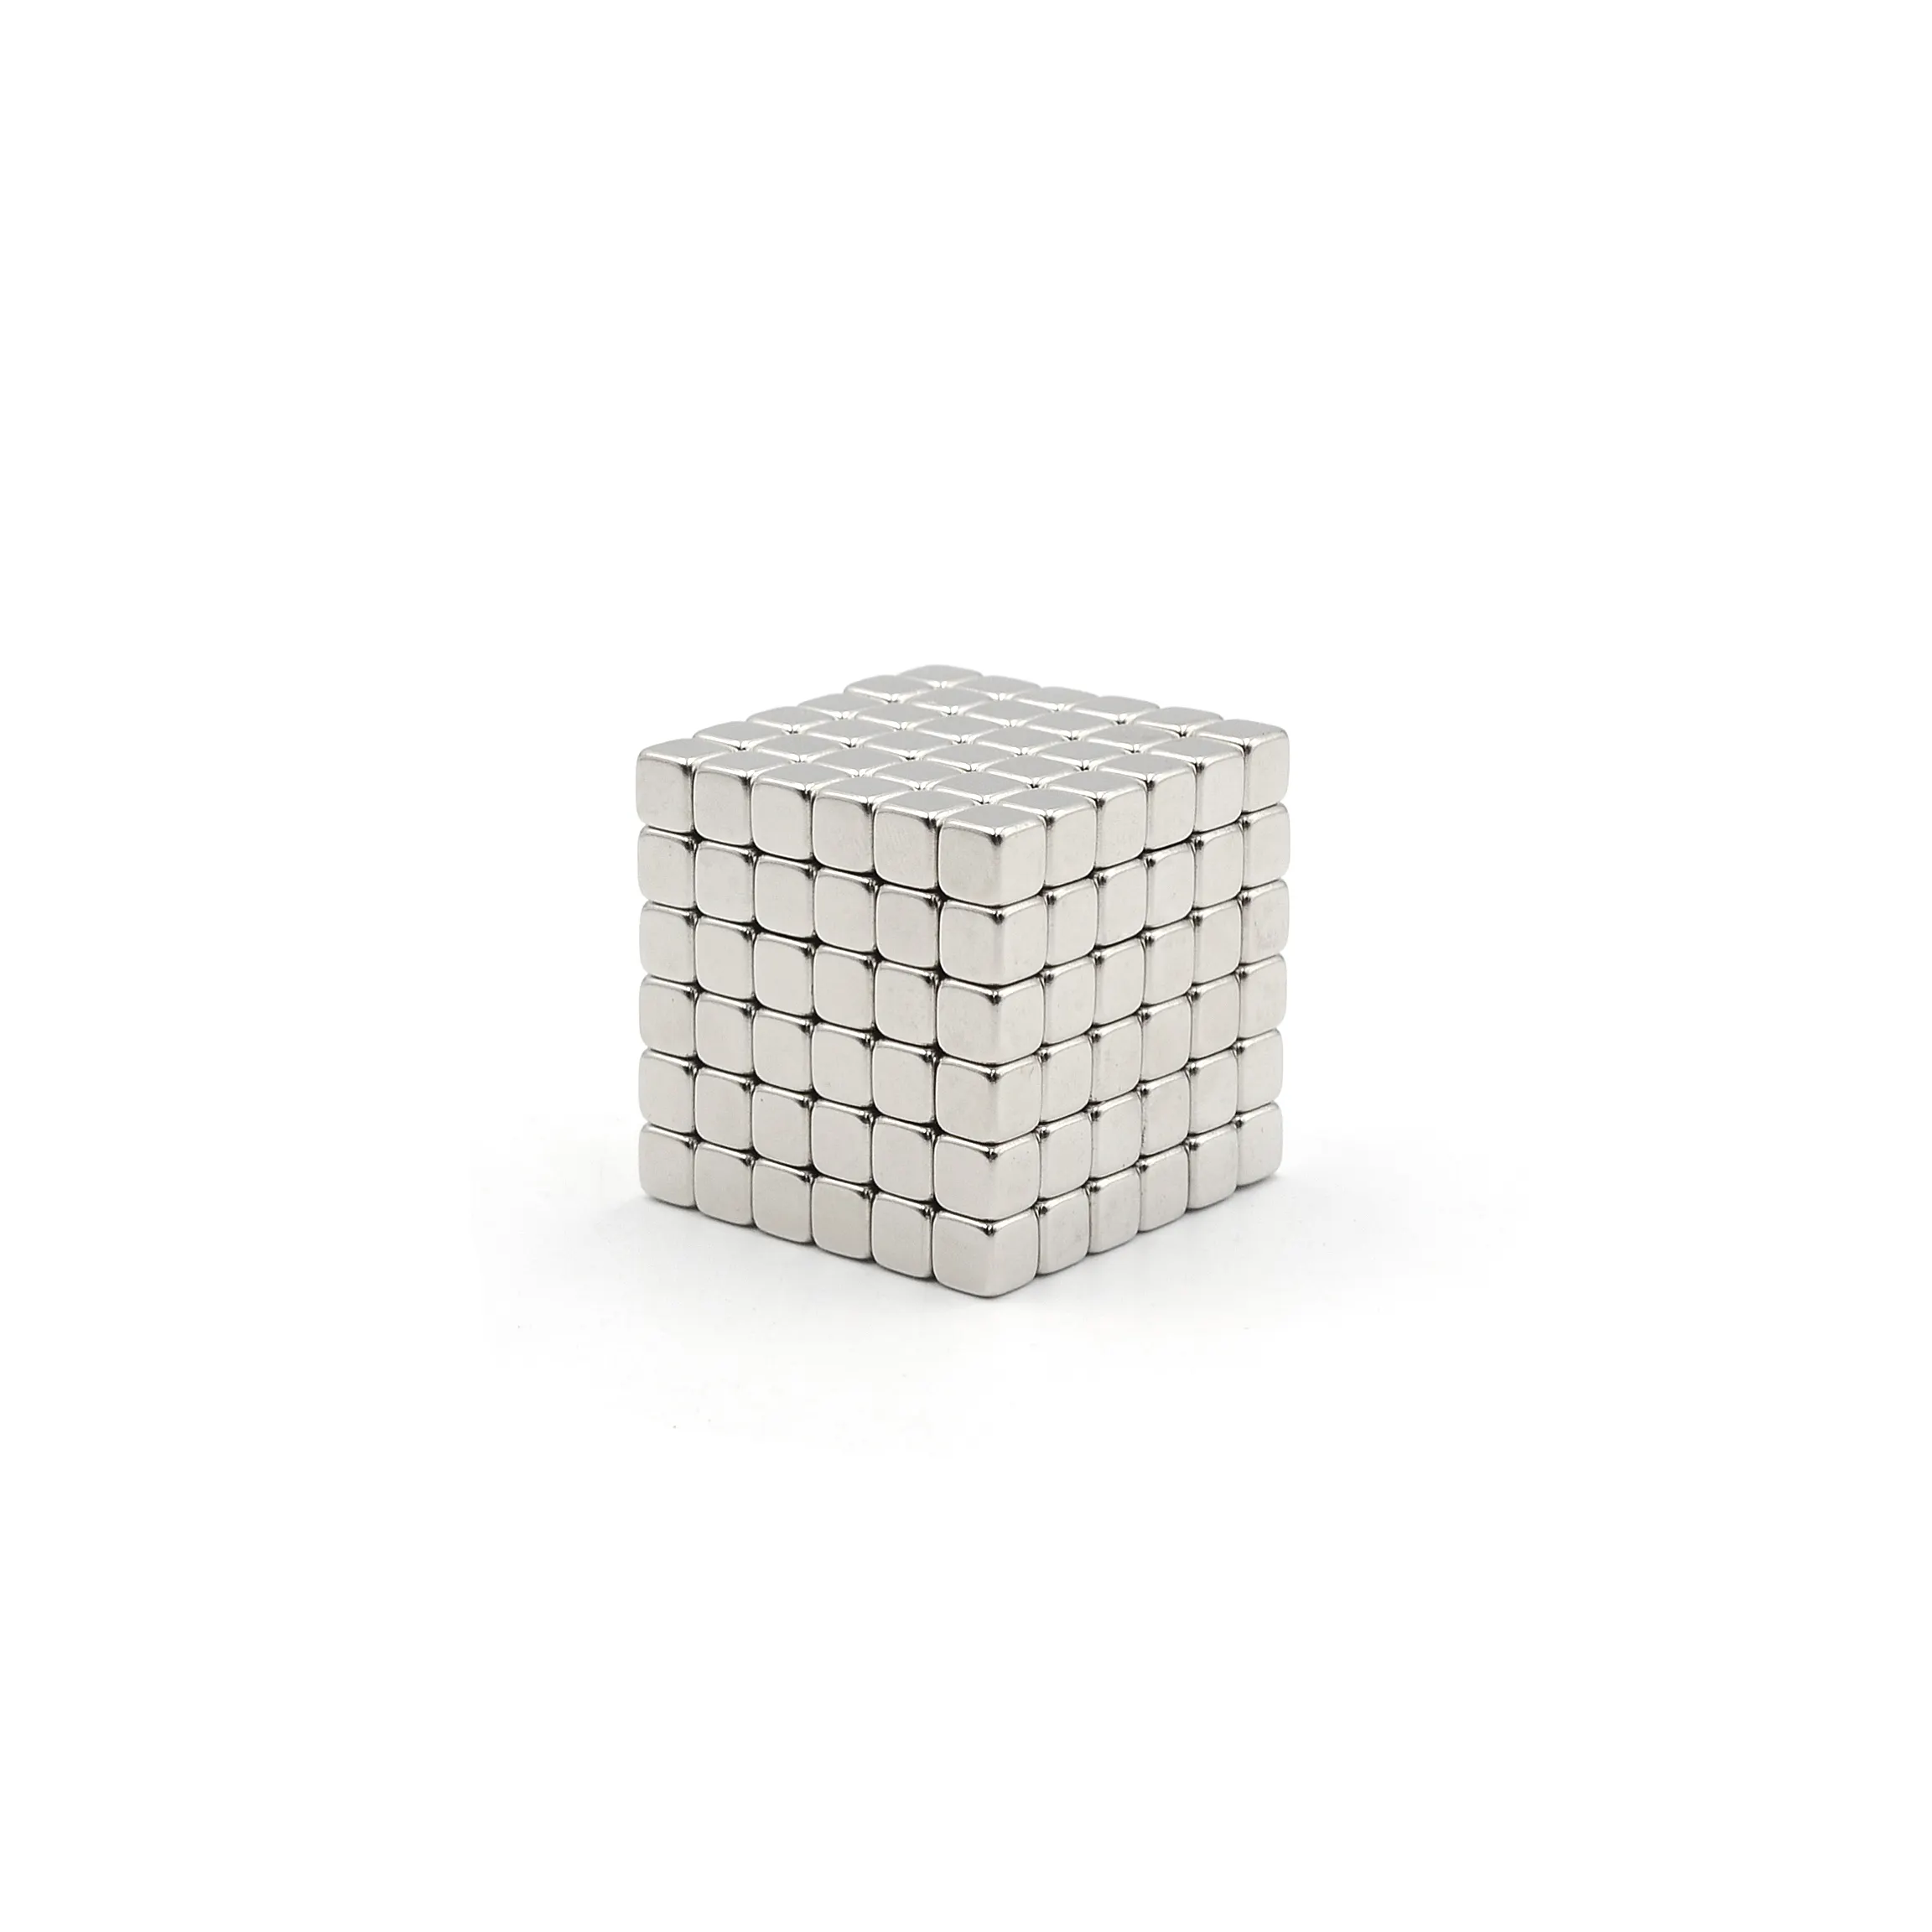 20 trozo de neodimio cubo imanes imán cubo 3x3x3 mm n45 niquelados